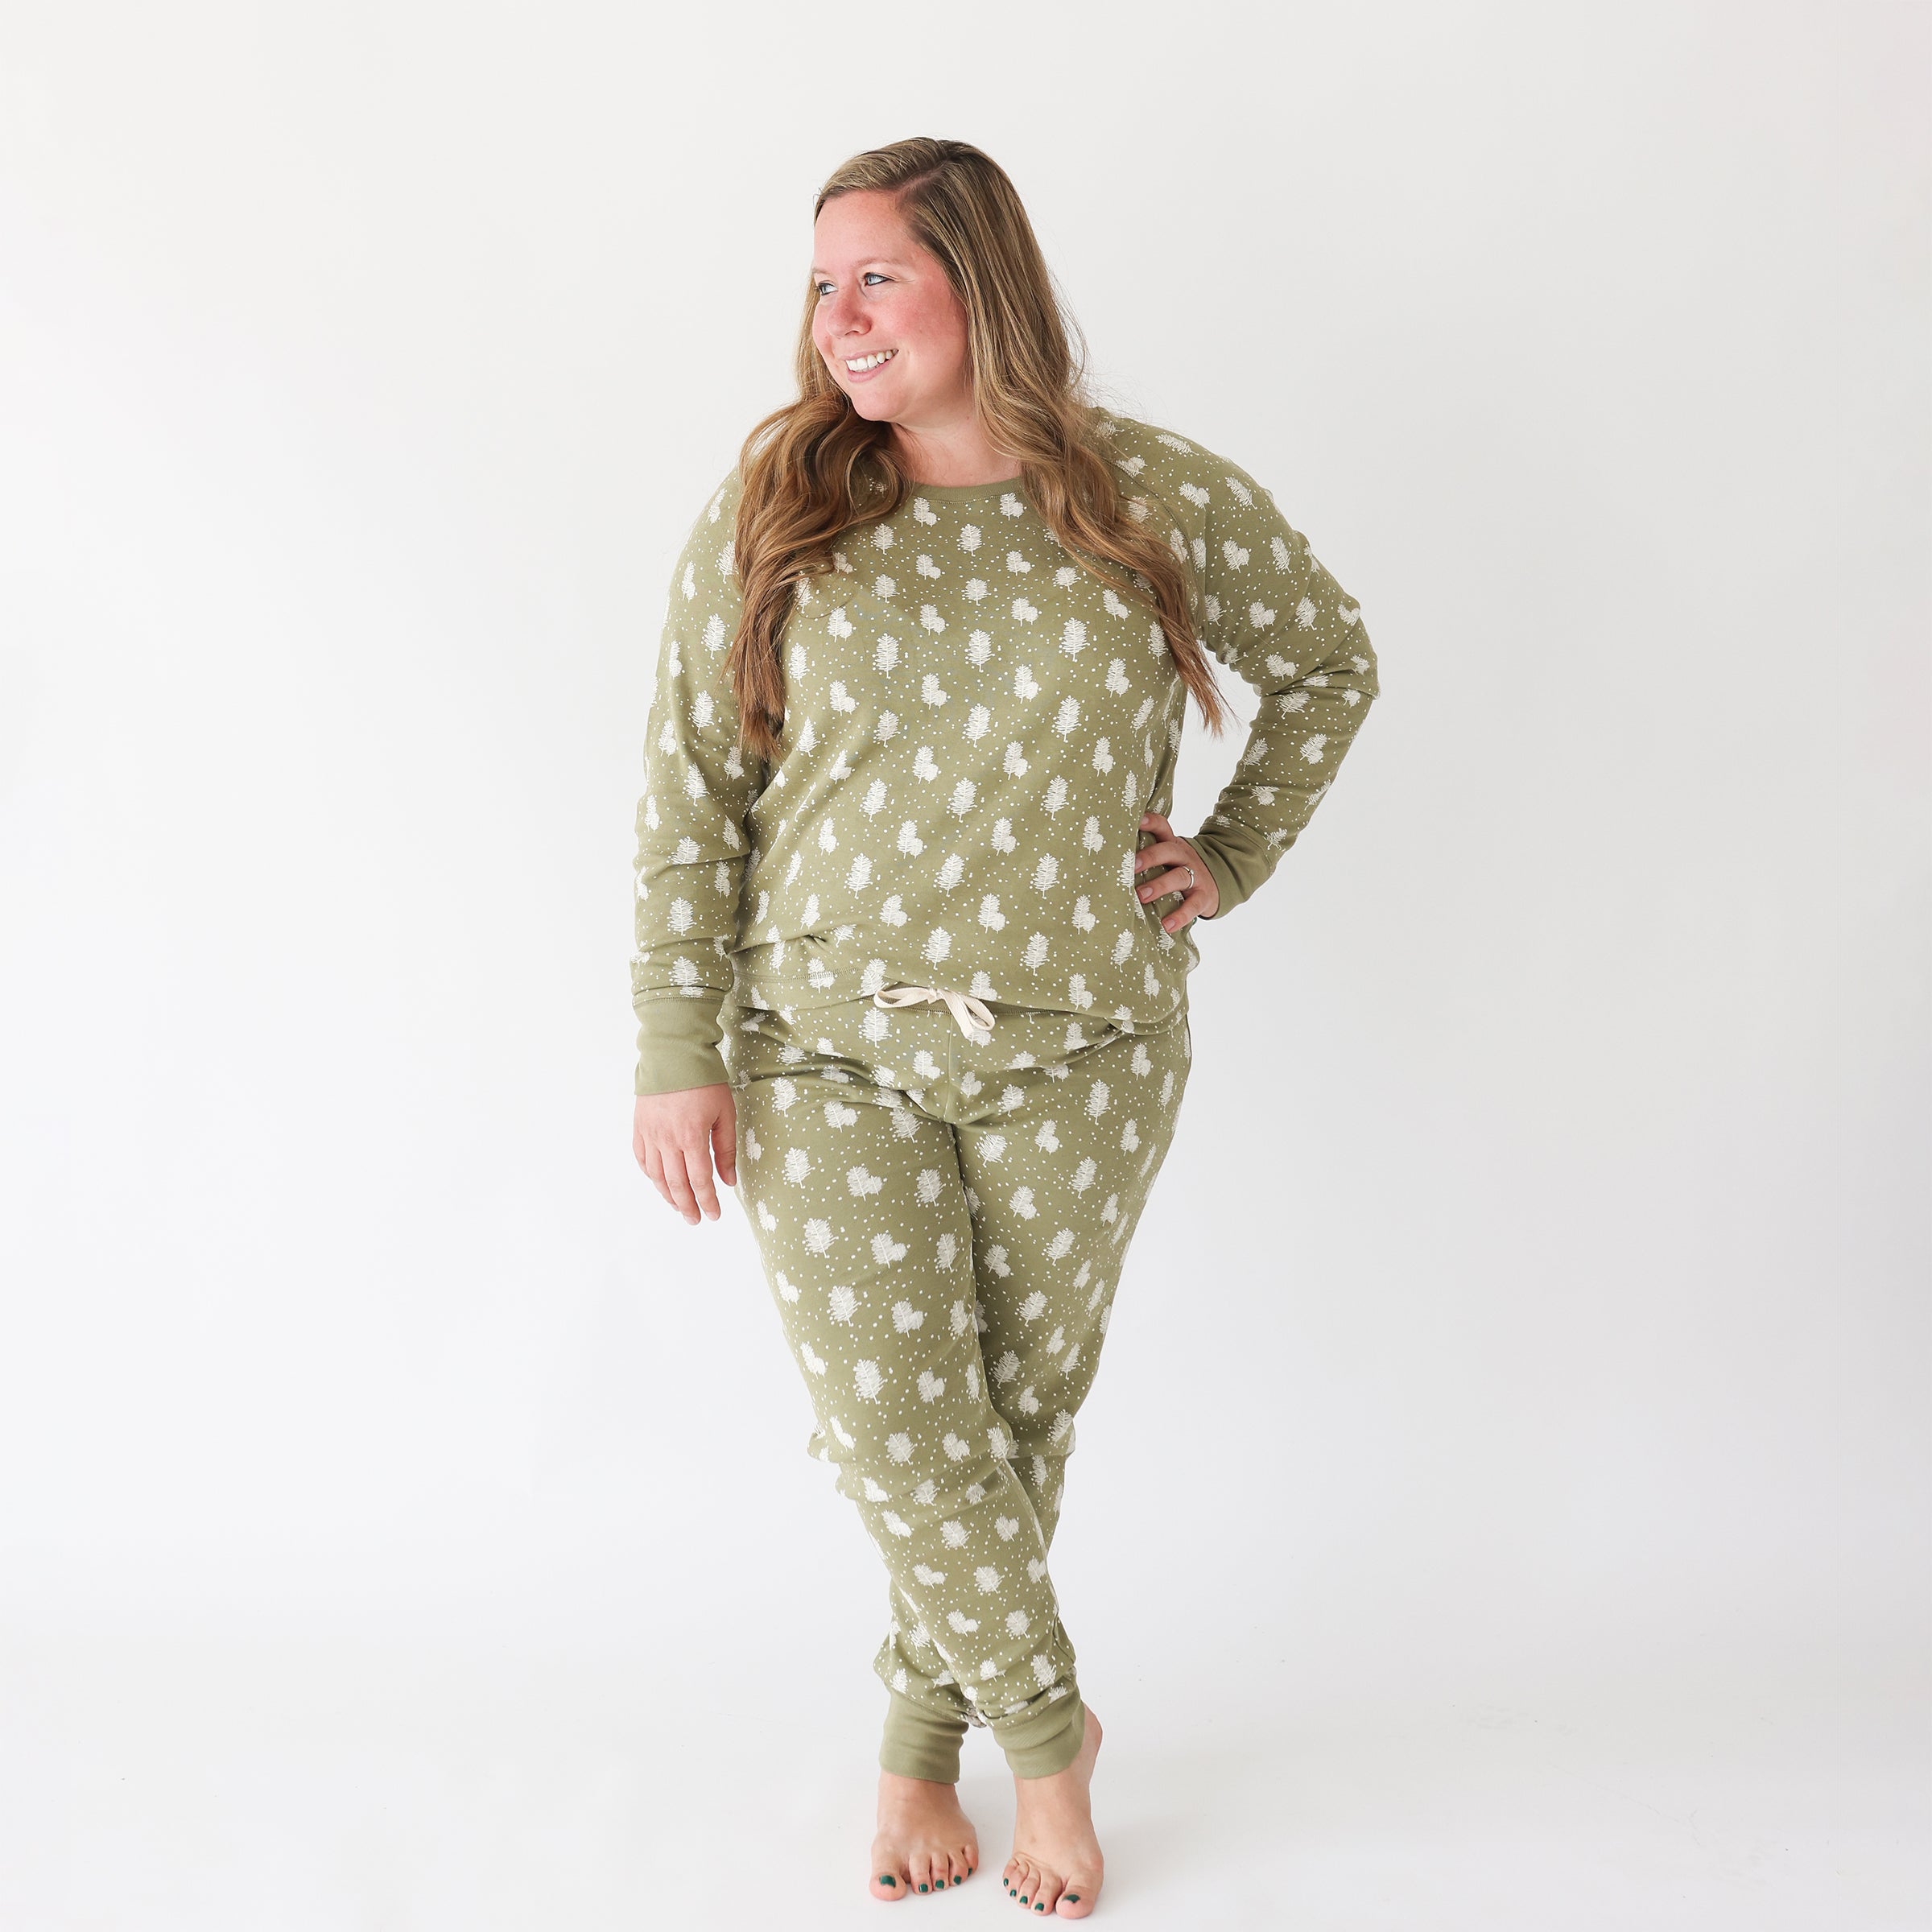 Organic "My Jammies" Matching Holiday Pajamas - Women's